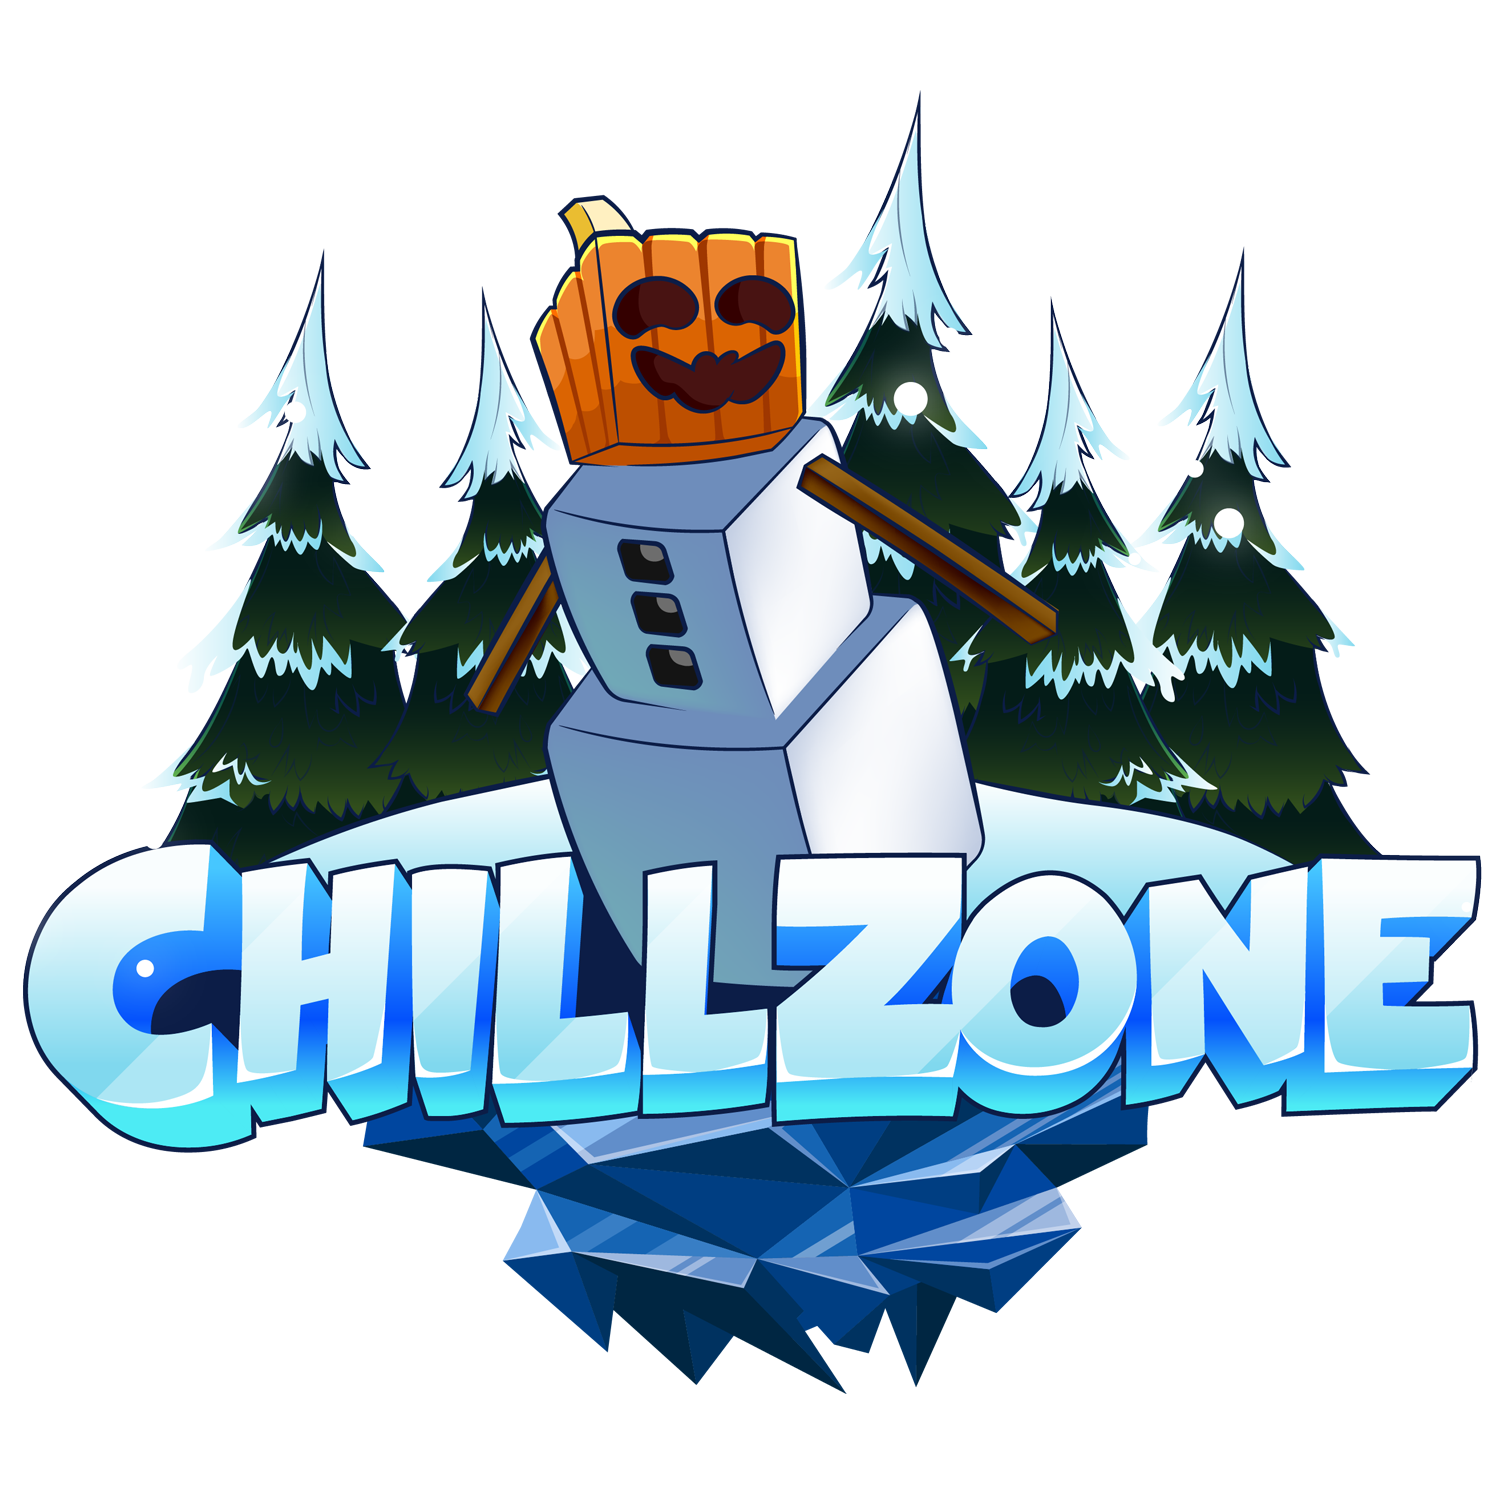 ChillZone Logo